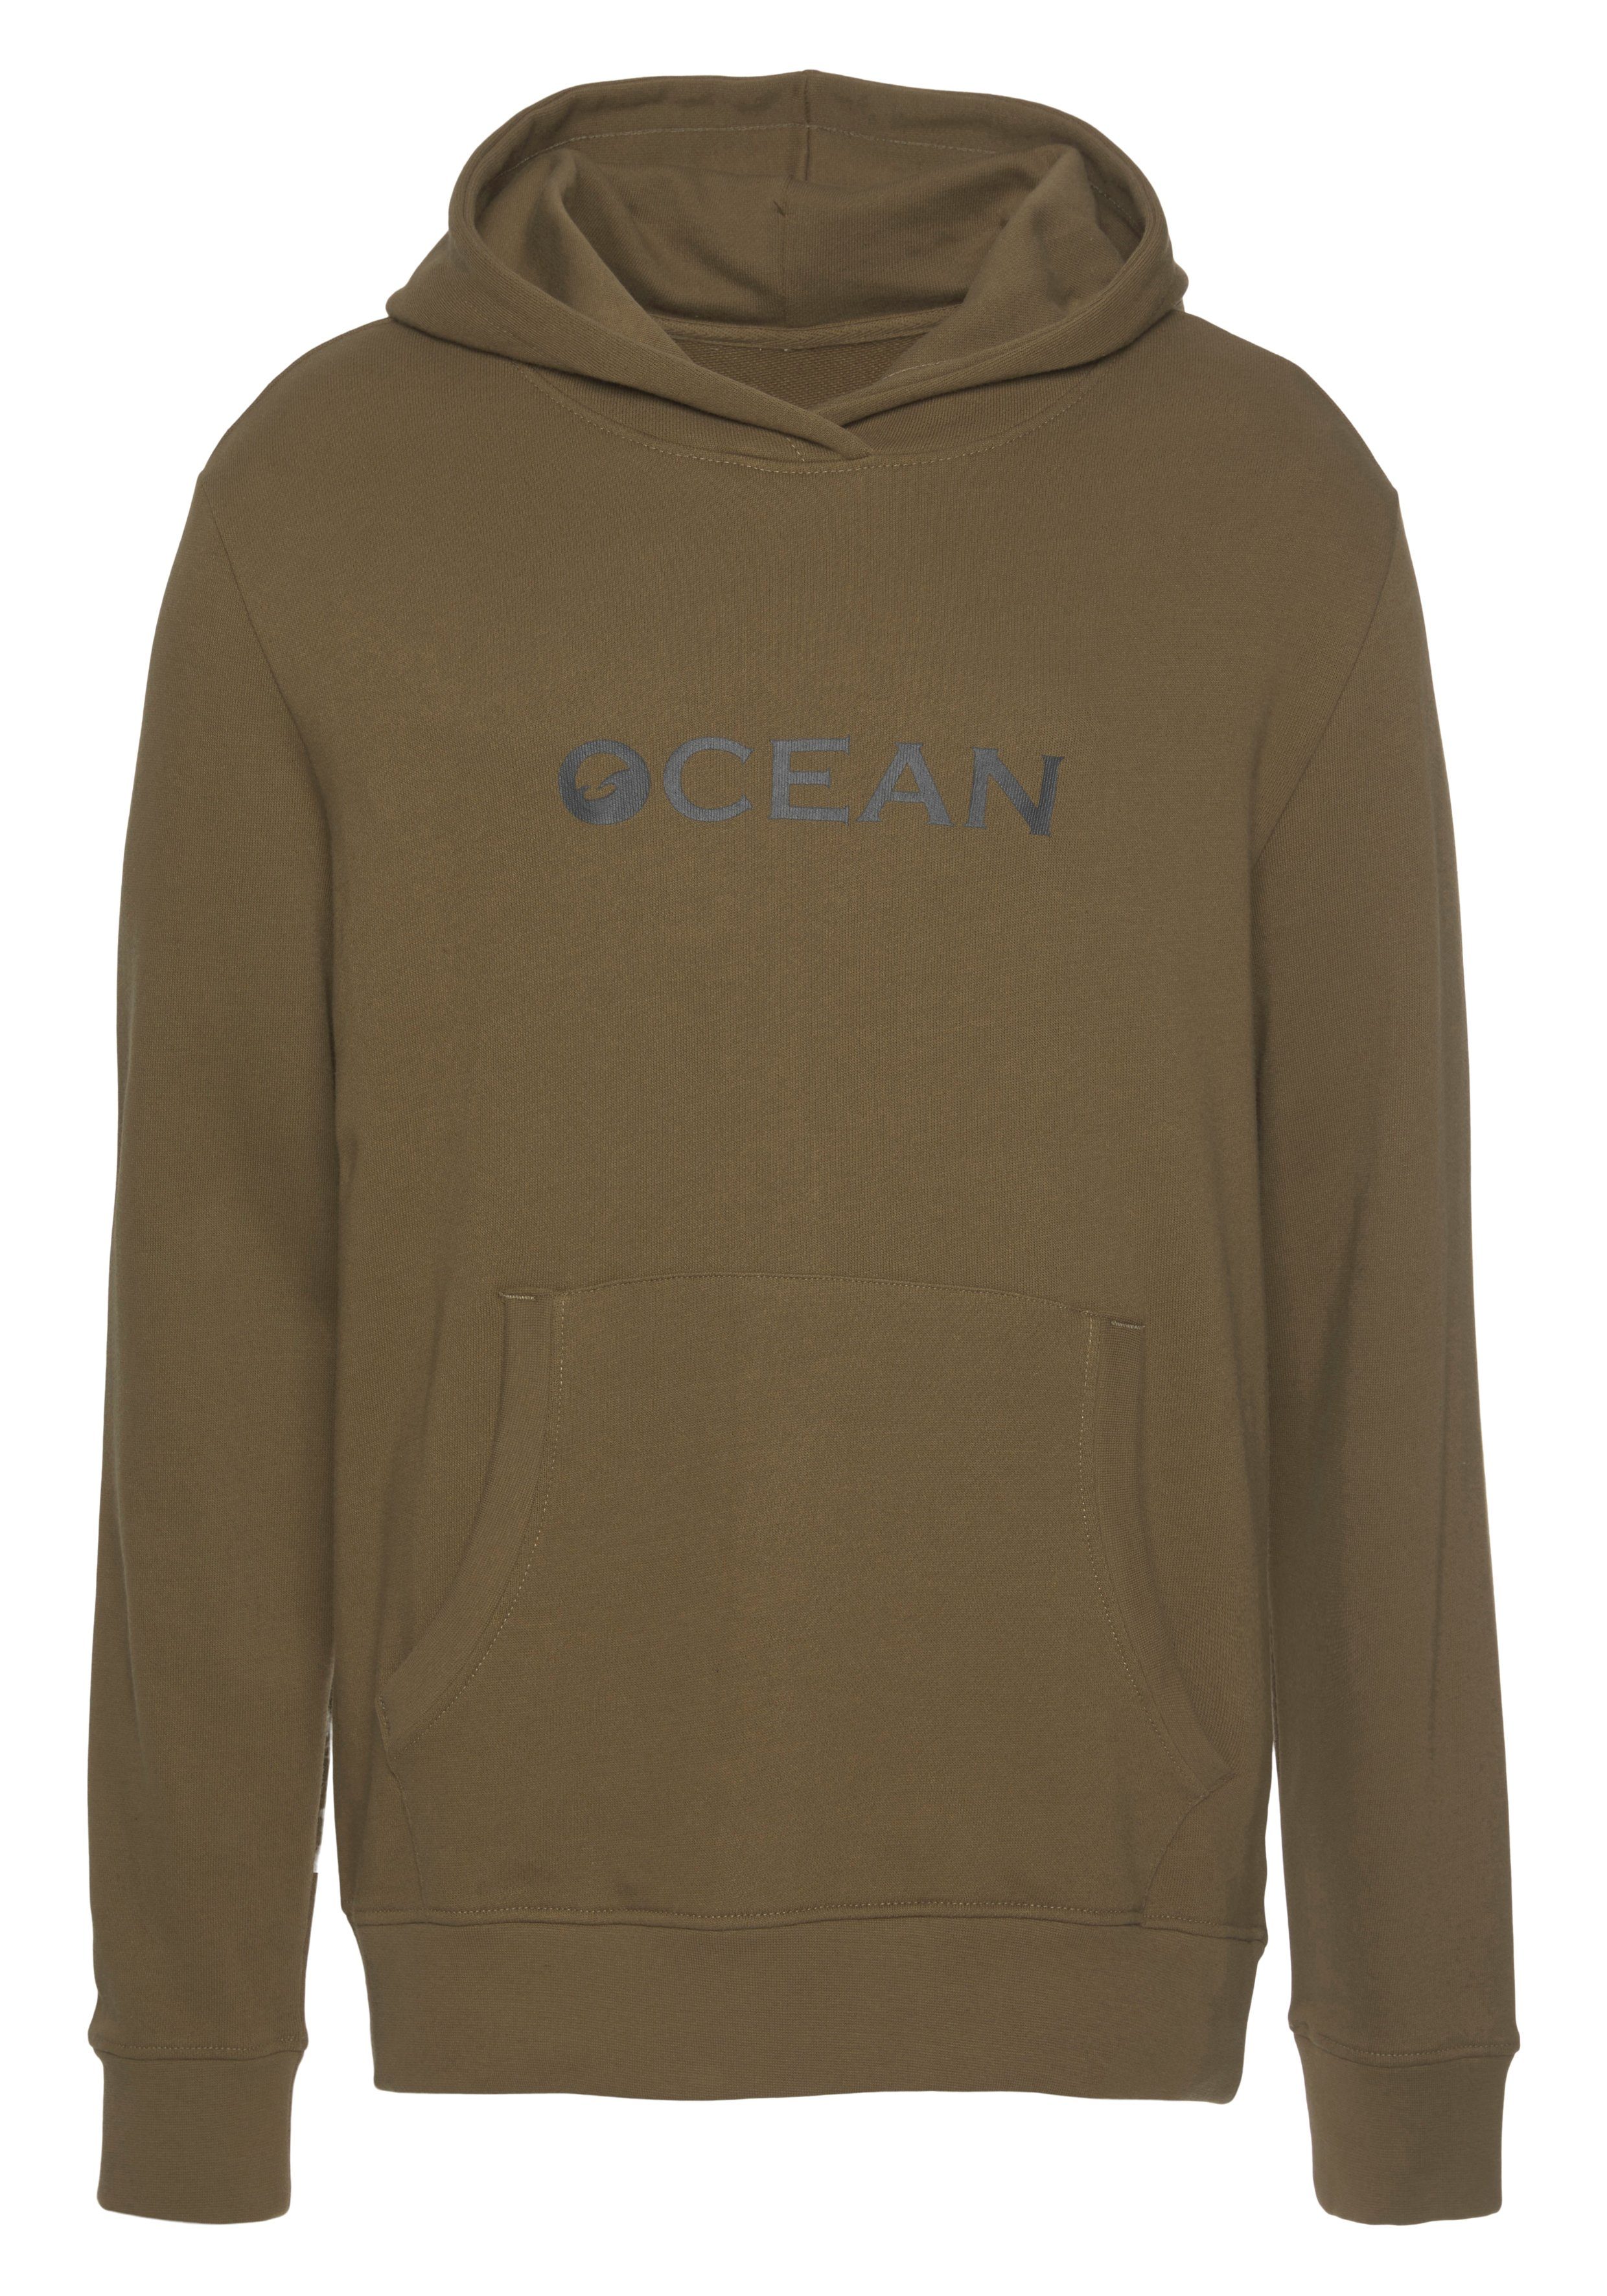 reiner Hoody aus Ocean Sportswear Kapuzensweatshirt Baumwolle khaki Essentials